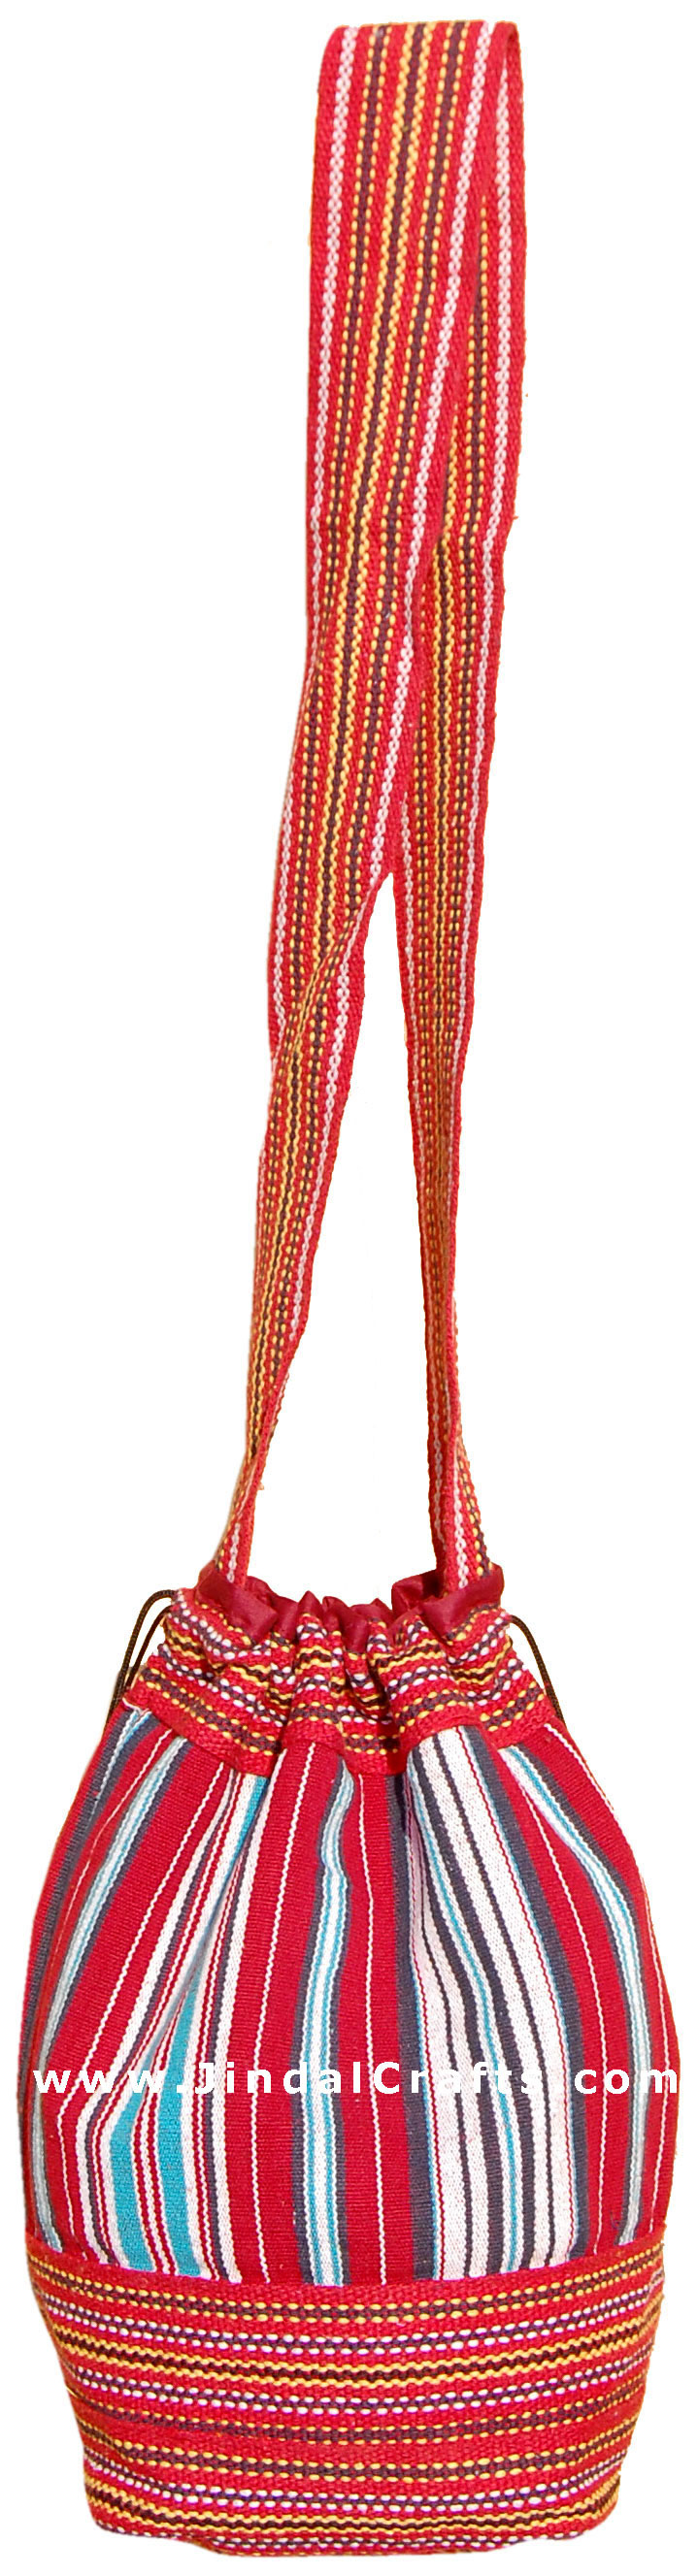 Tie Handbag  Indian Traditional Art